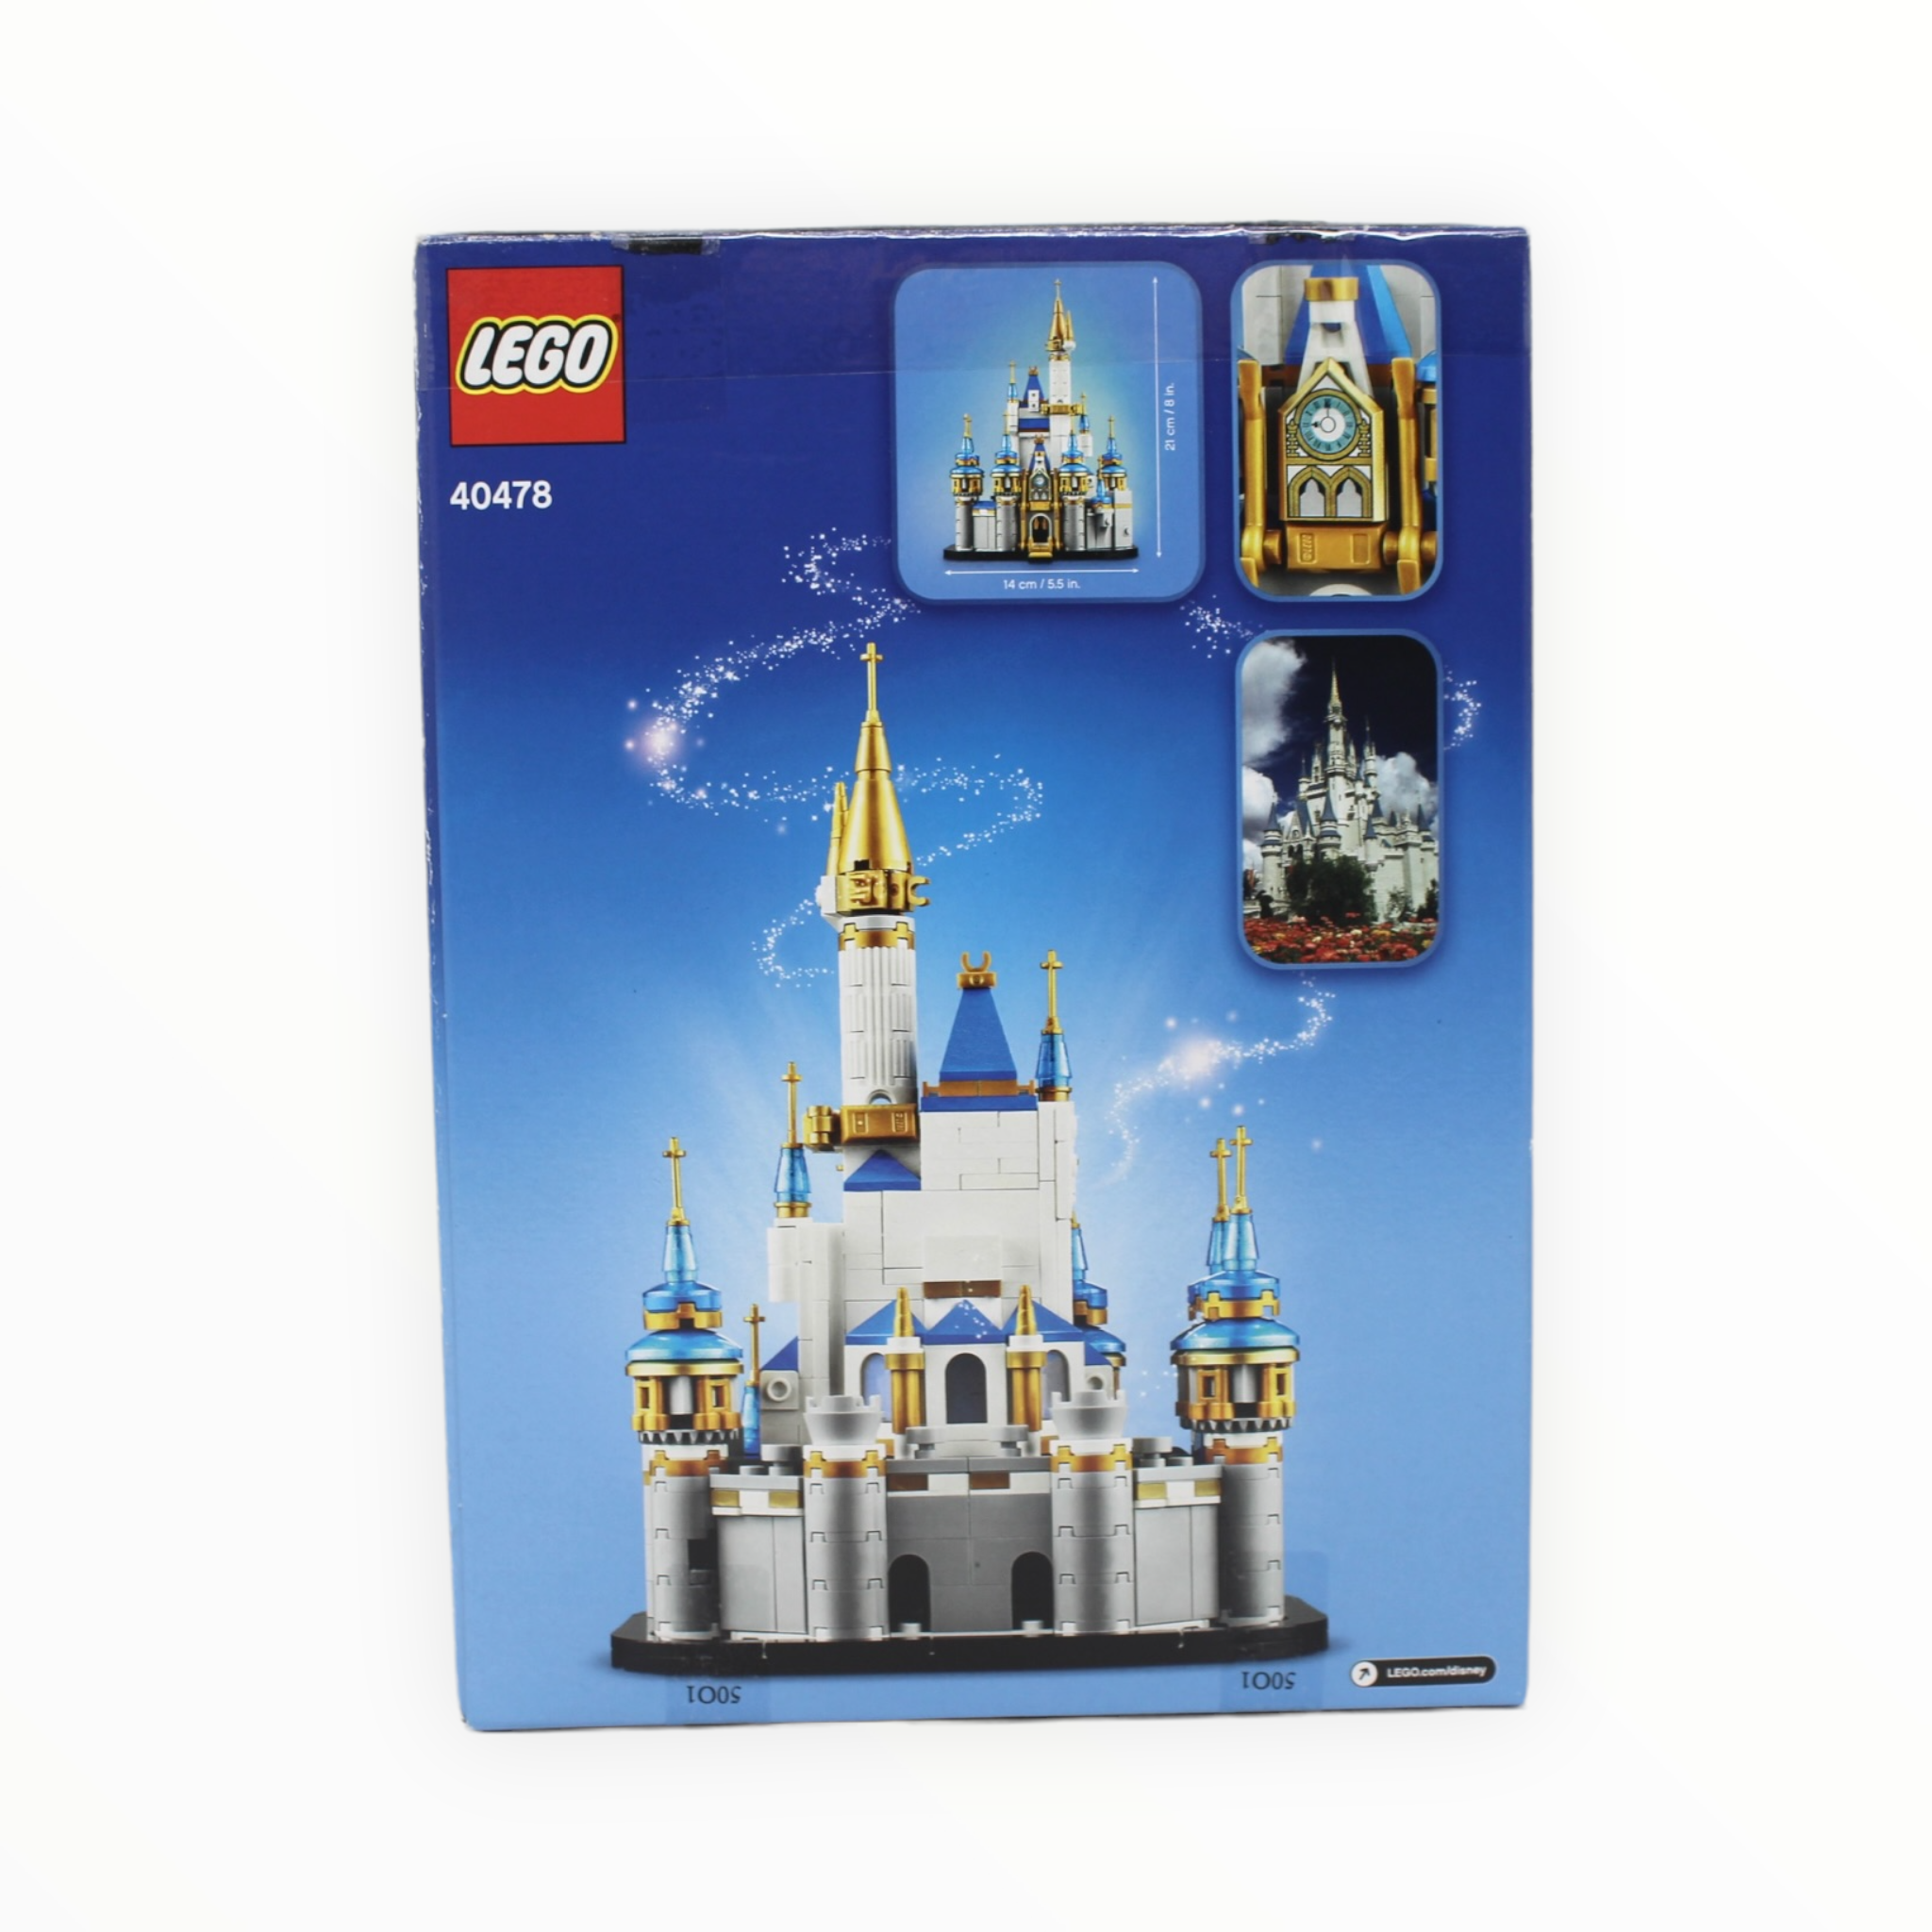 Certified Used Set 40478 Mini Disney Castle